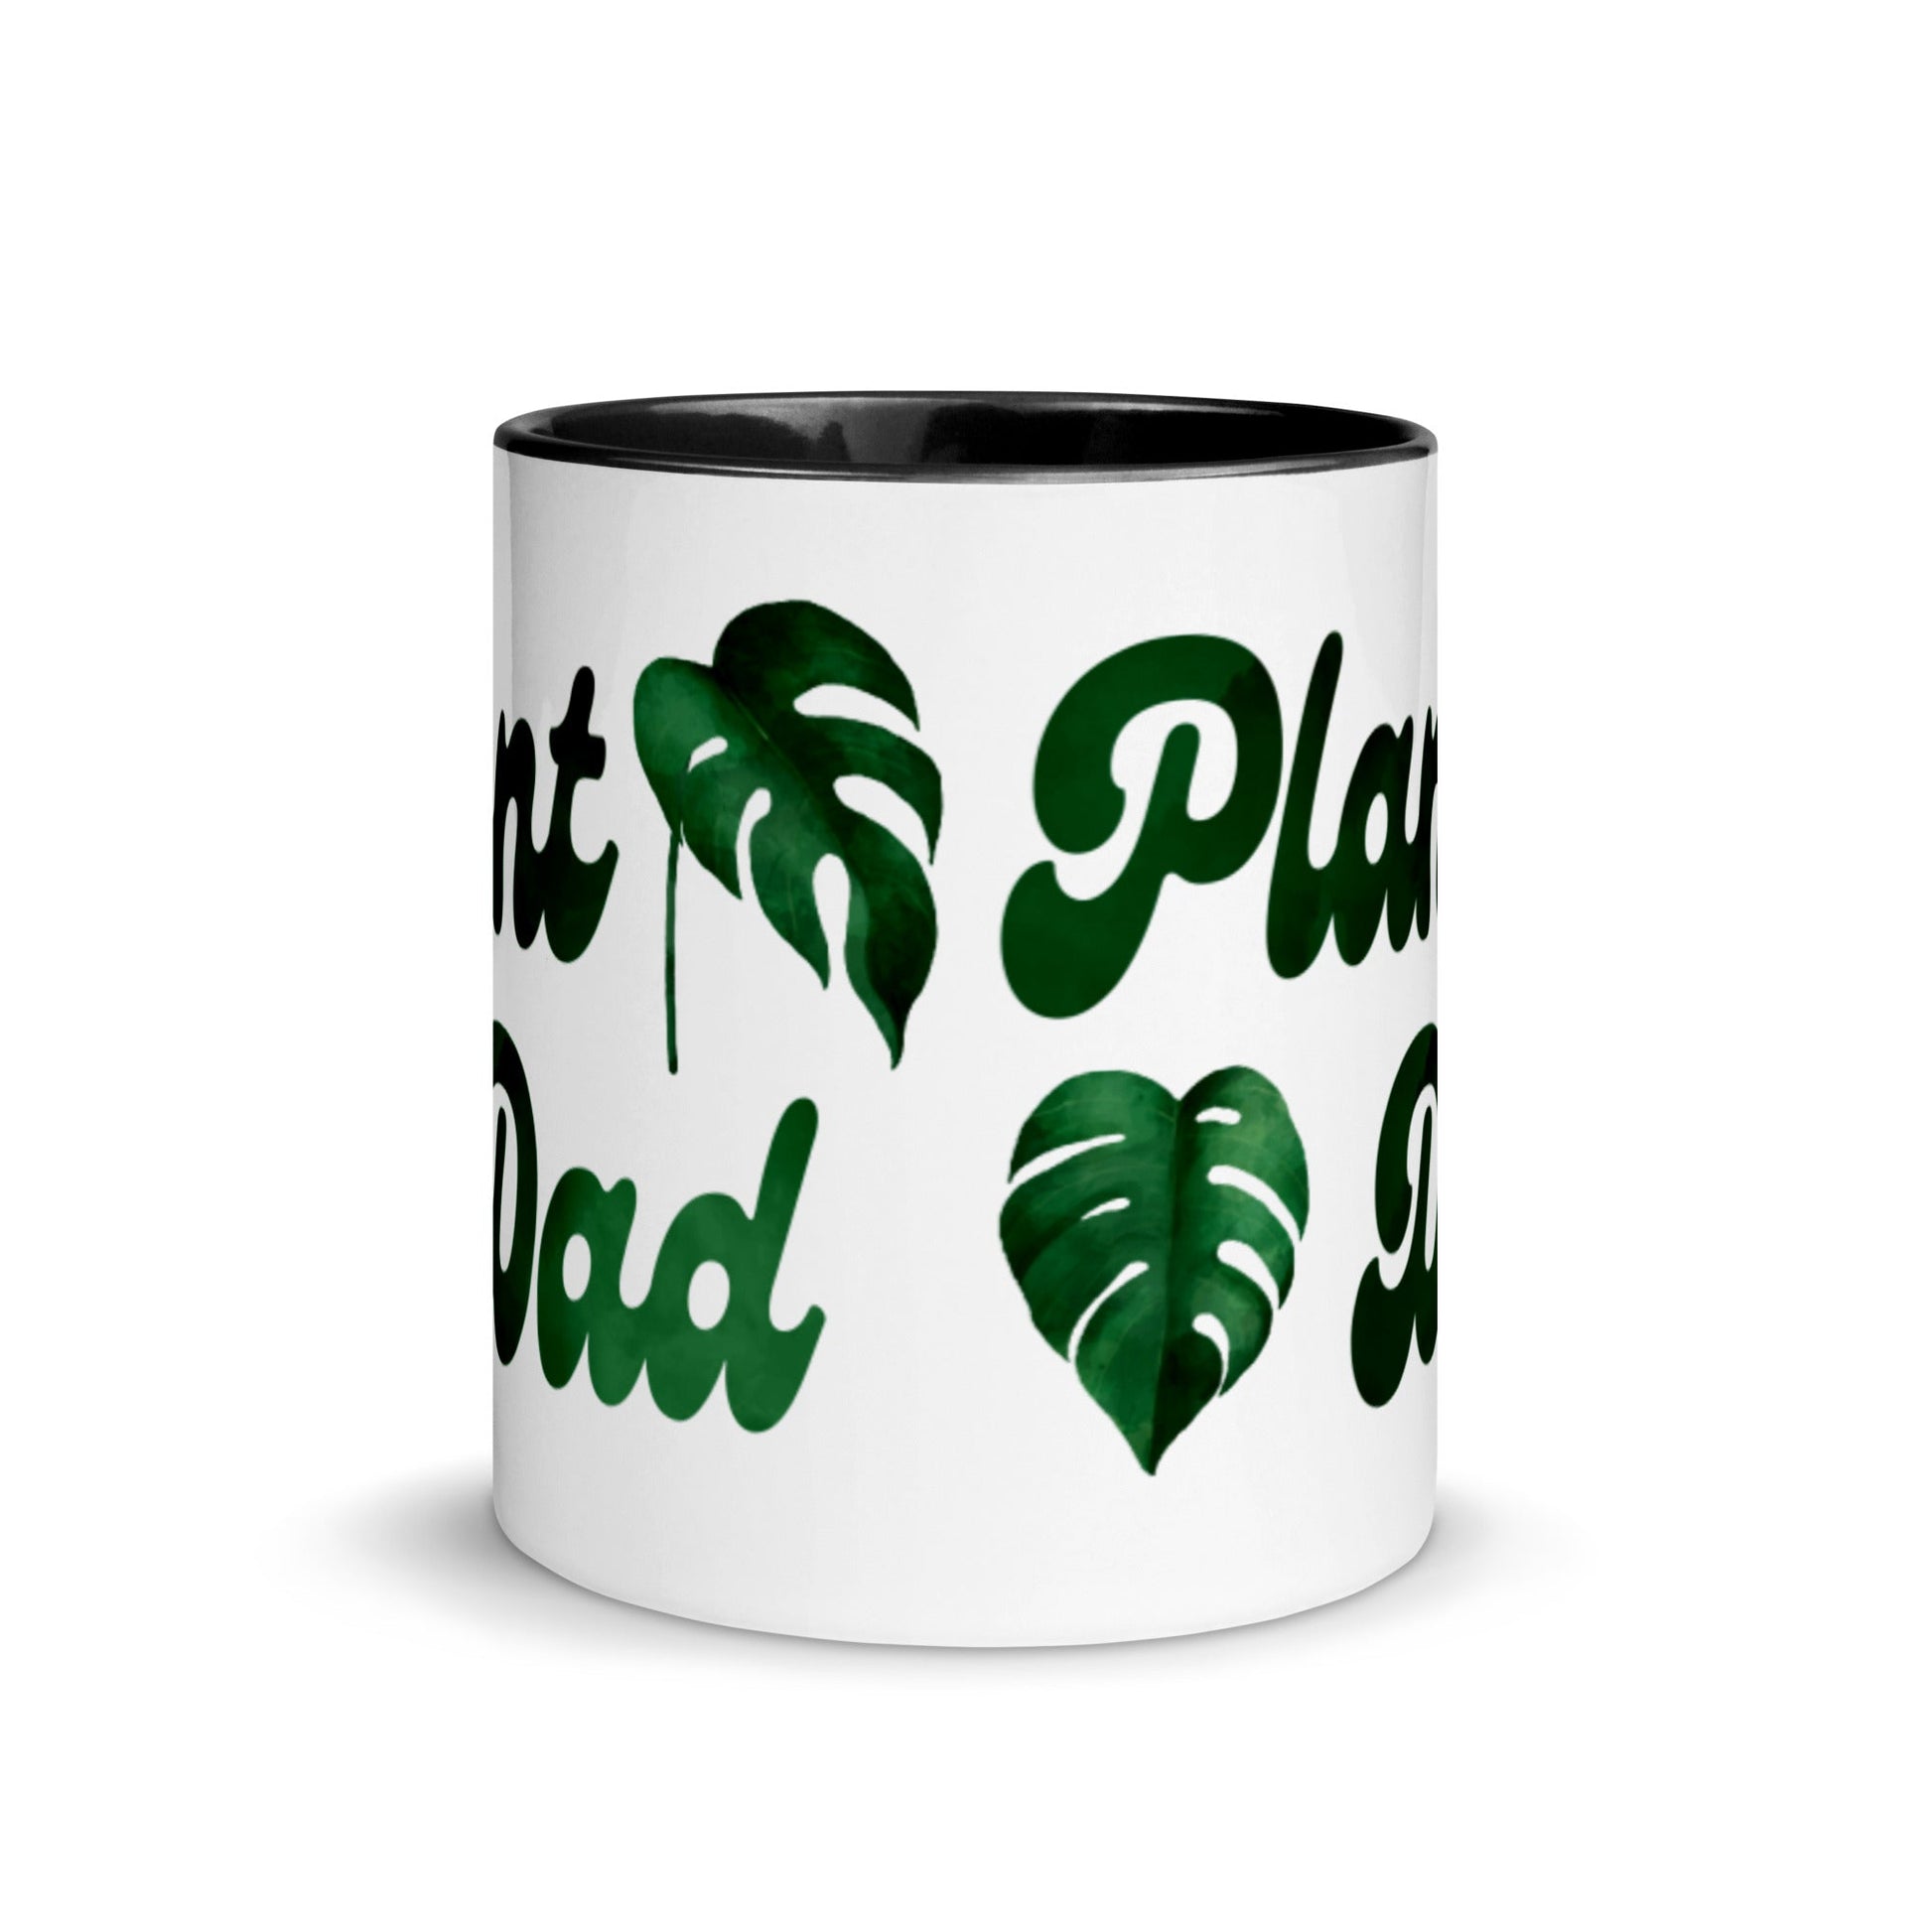 Plant Dad Mug - Green Philosophy Co.